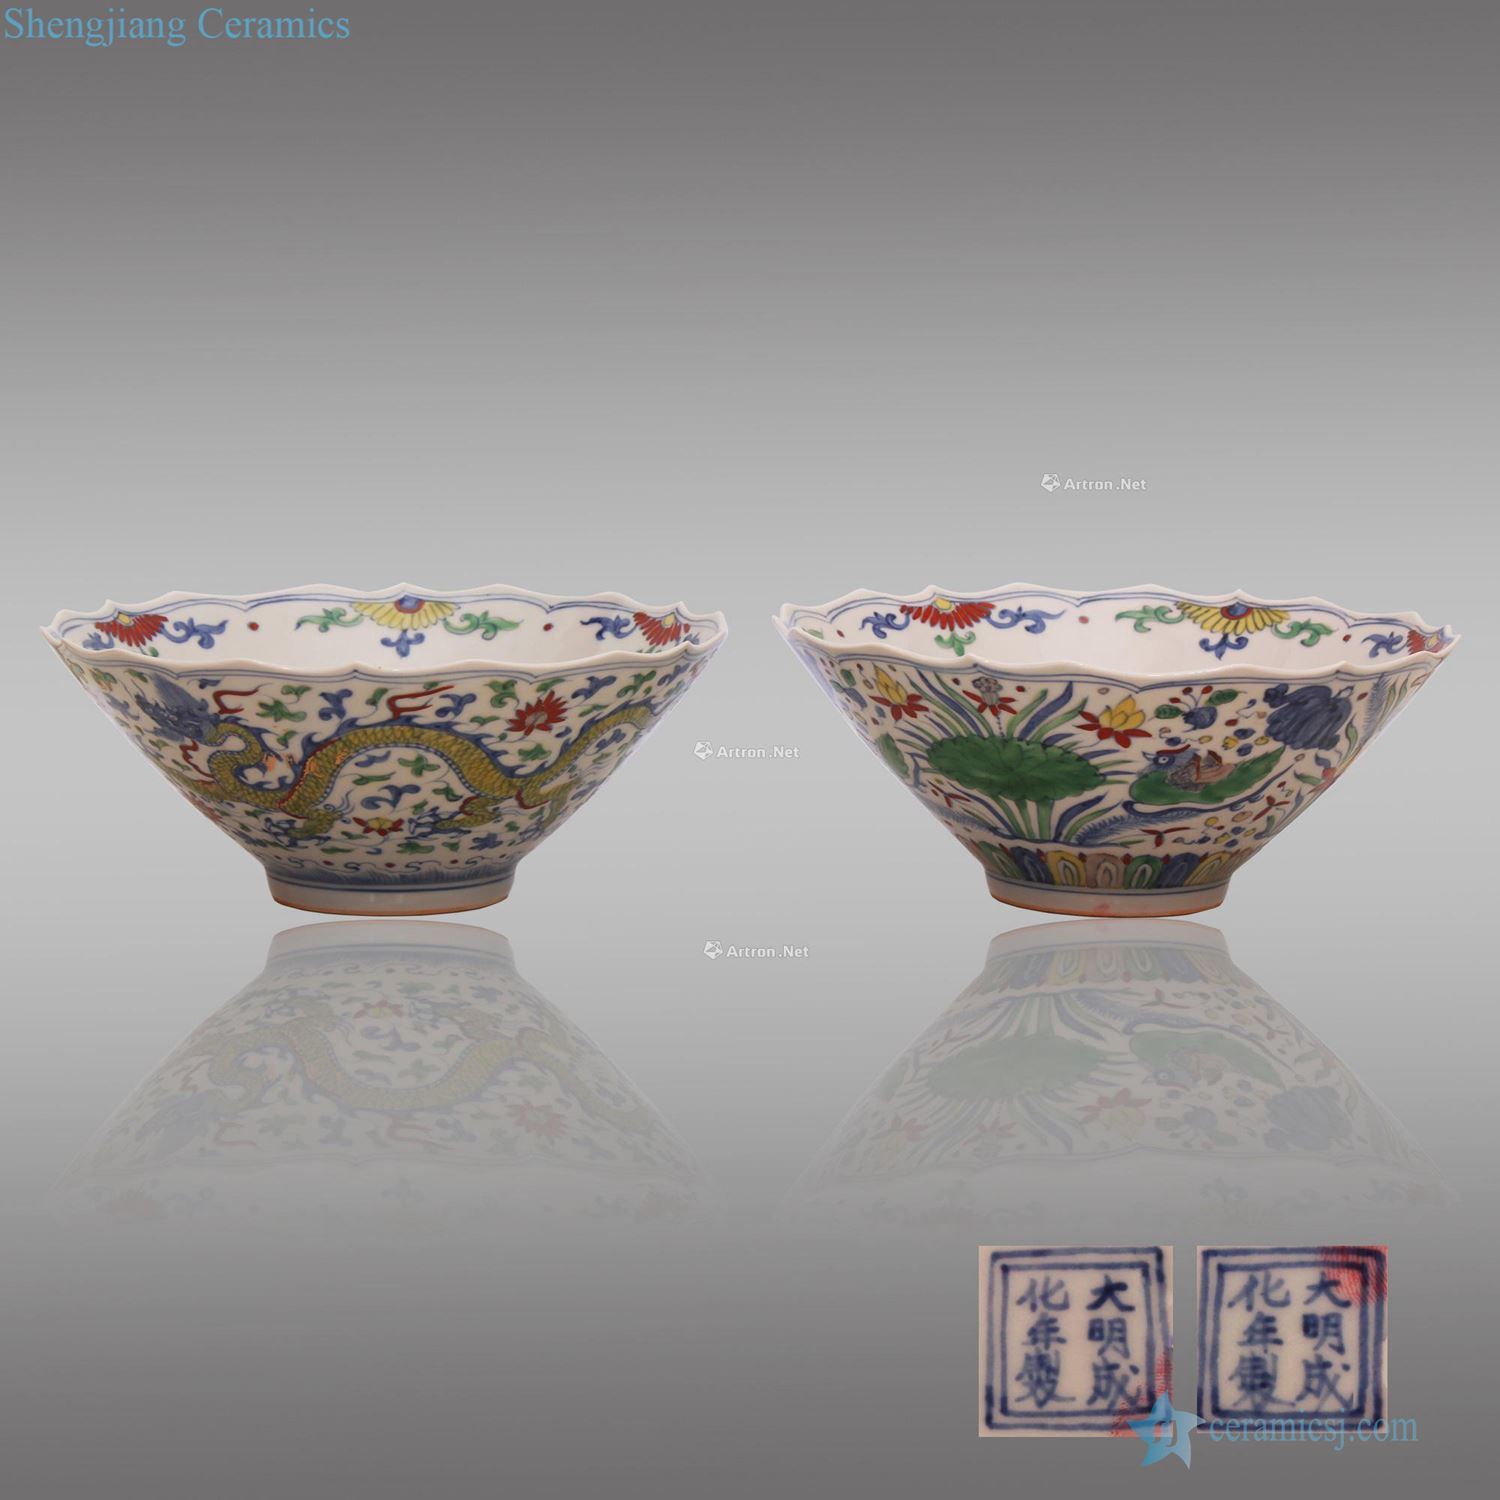 Ming Longfeng yuanyang bowl (a)